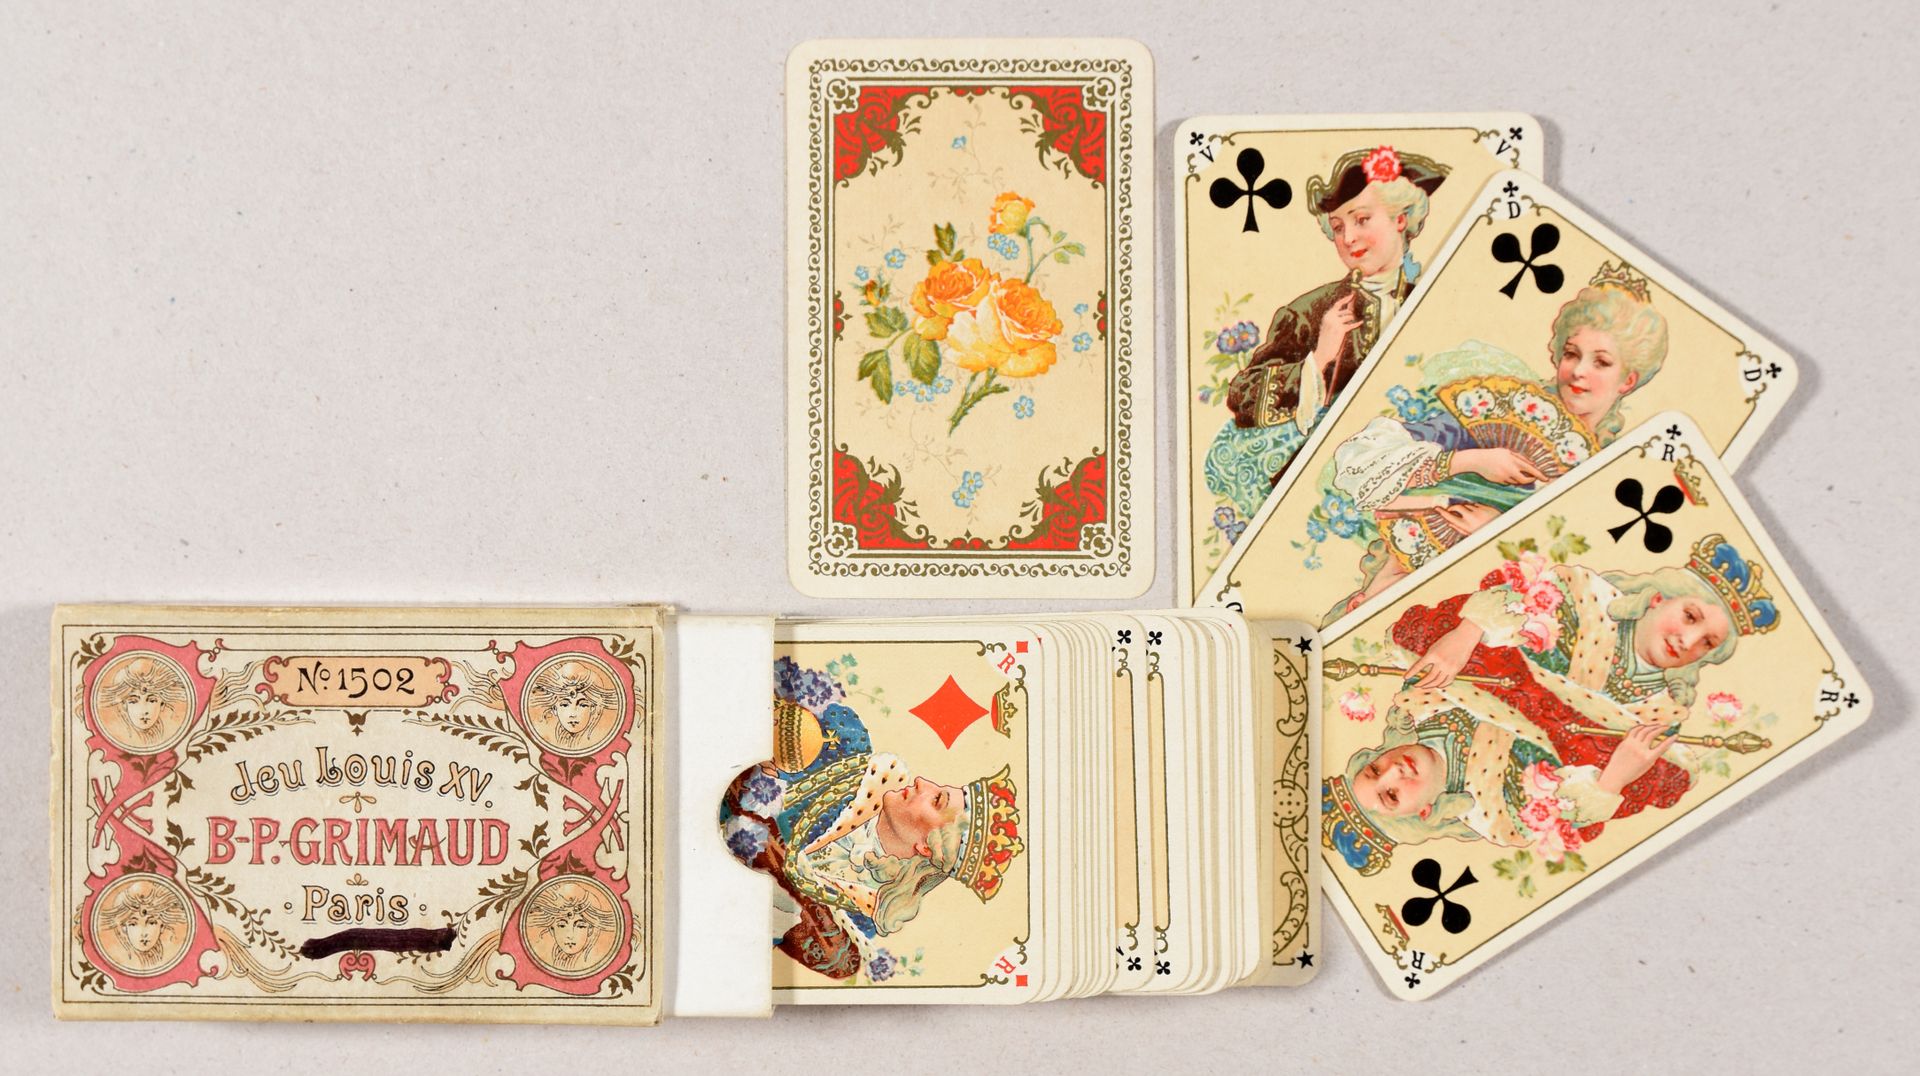 Null "Jeu Louis XV". París B.-P. Grimaud [c. 1890] 2 encabezados, cromolito, 9,2&hellip;